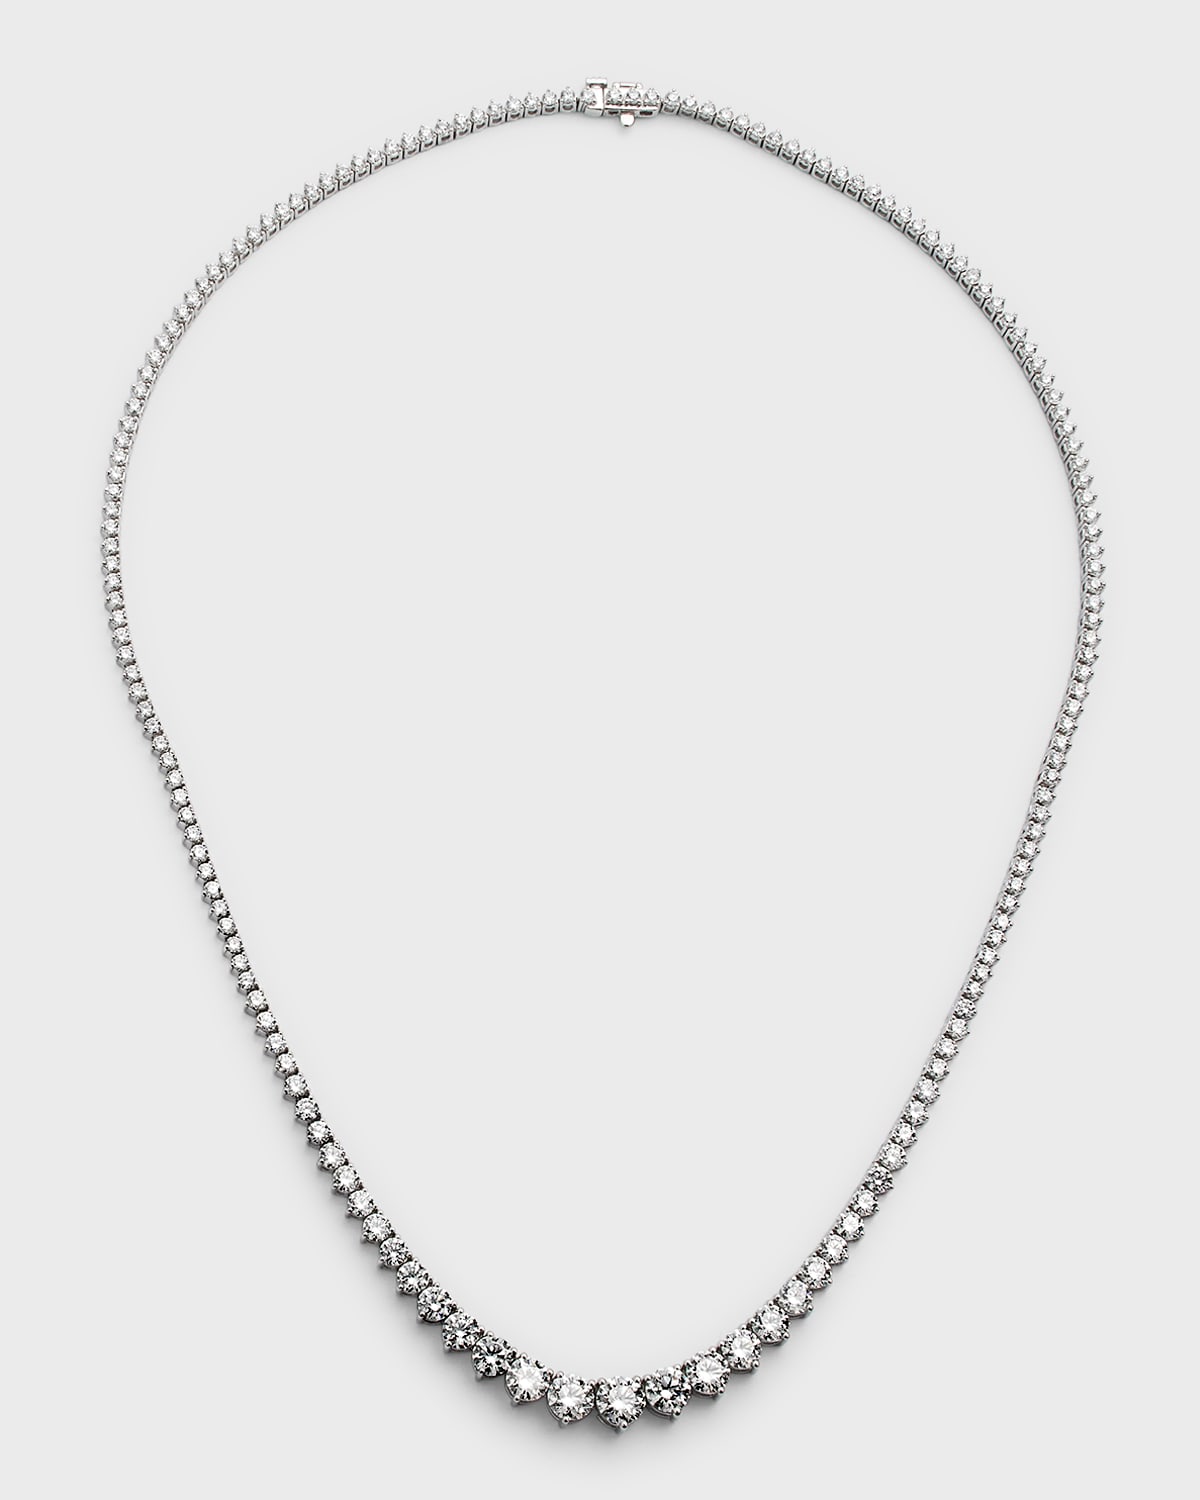 Neiman Marcus Diamonds 18k White Gold Graduated Diamond Tennis Necklace, 10.17tcw